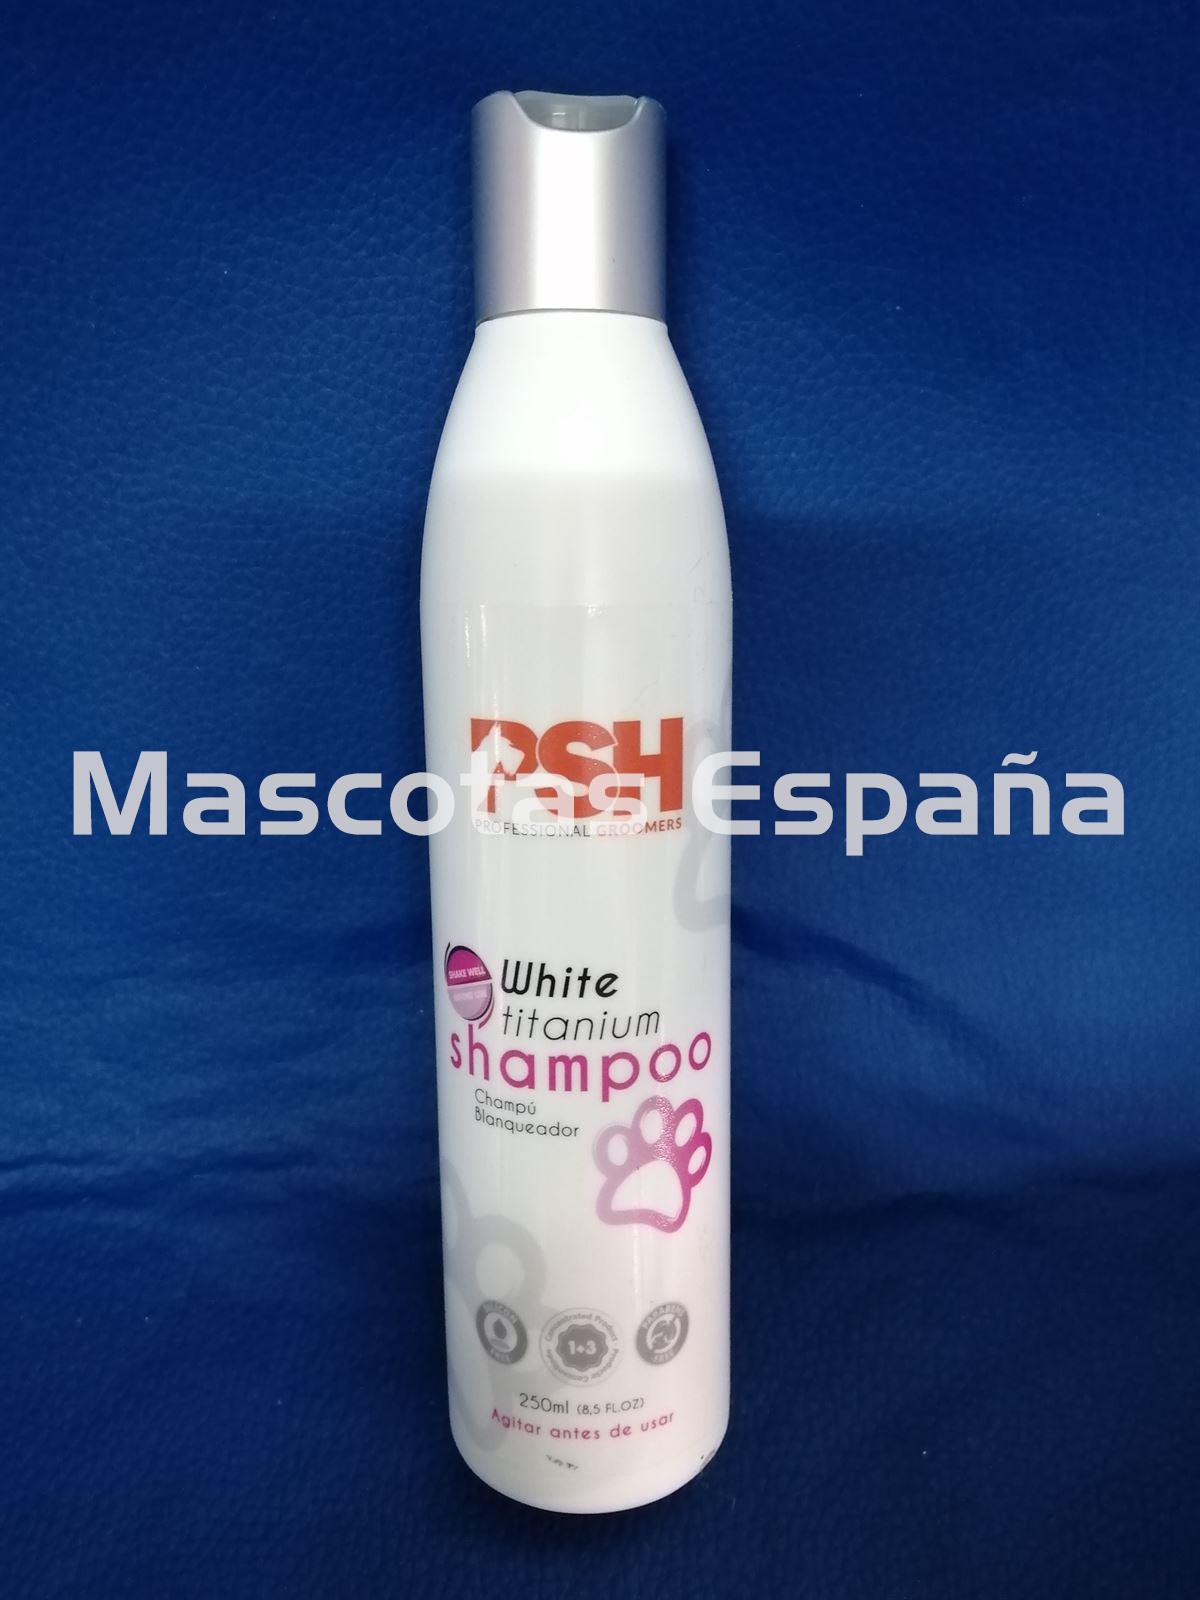 PSH White Titanium Shampoo (Champú Blanqueador) 250ml - Imagen 1